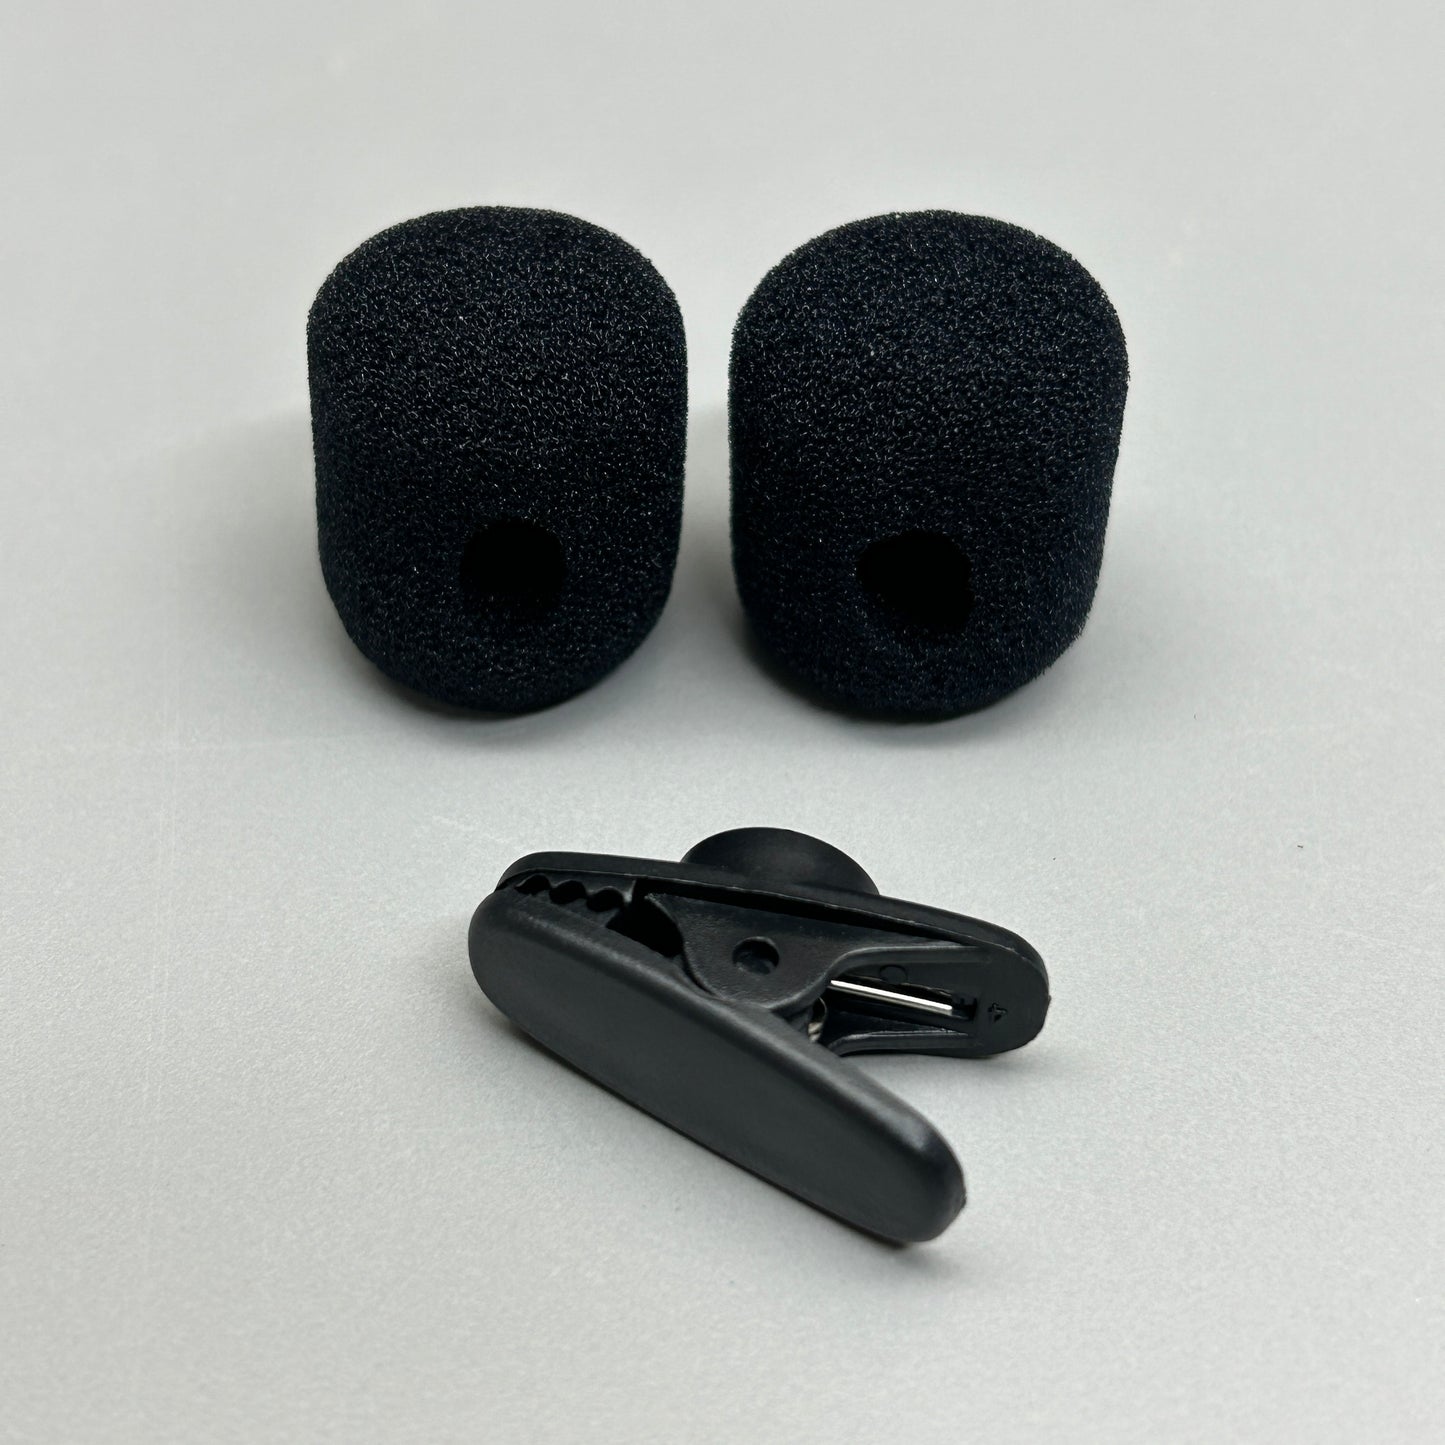 SHURE Fitness Headset Condenser Microphone Orange/Black (New)